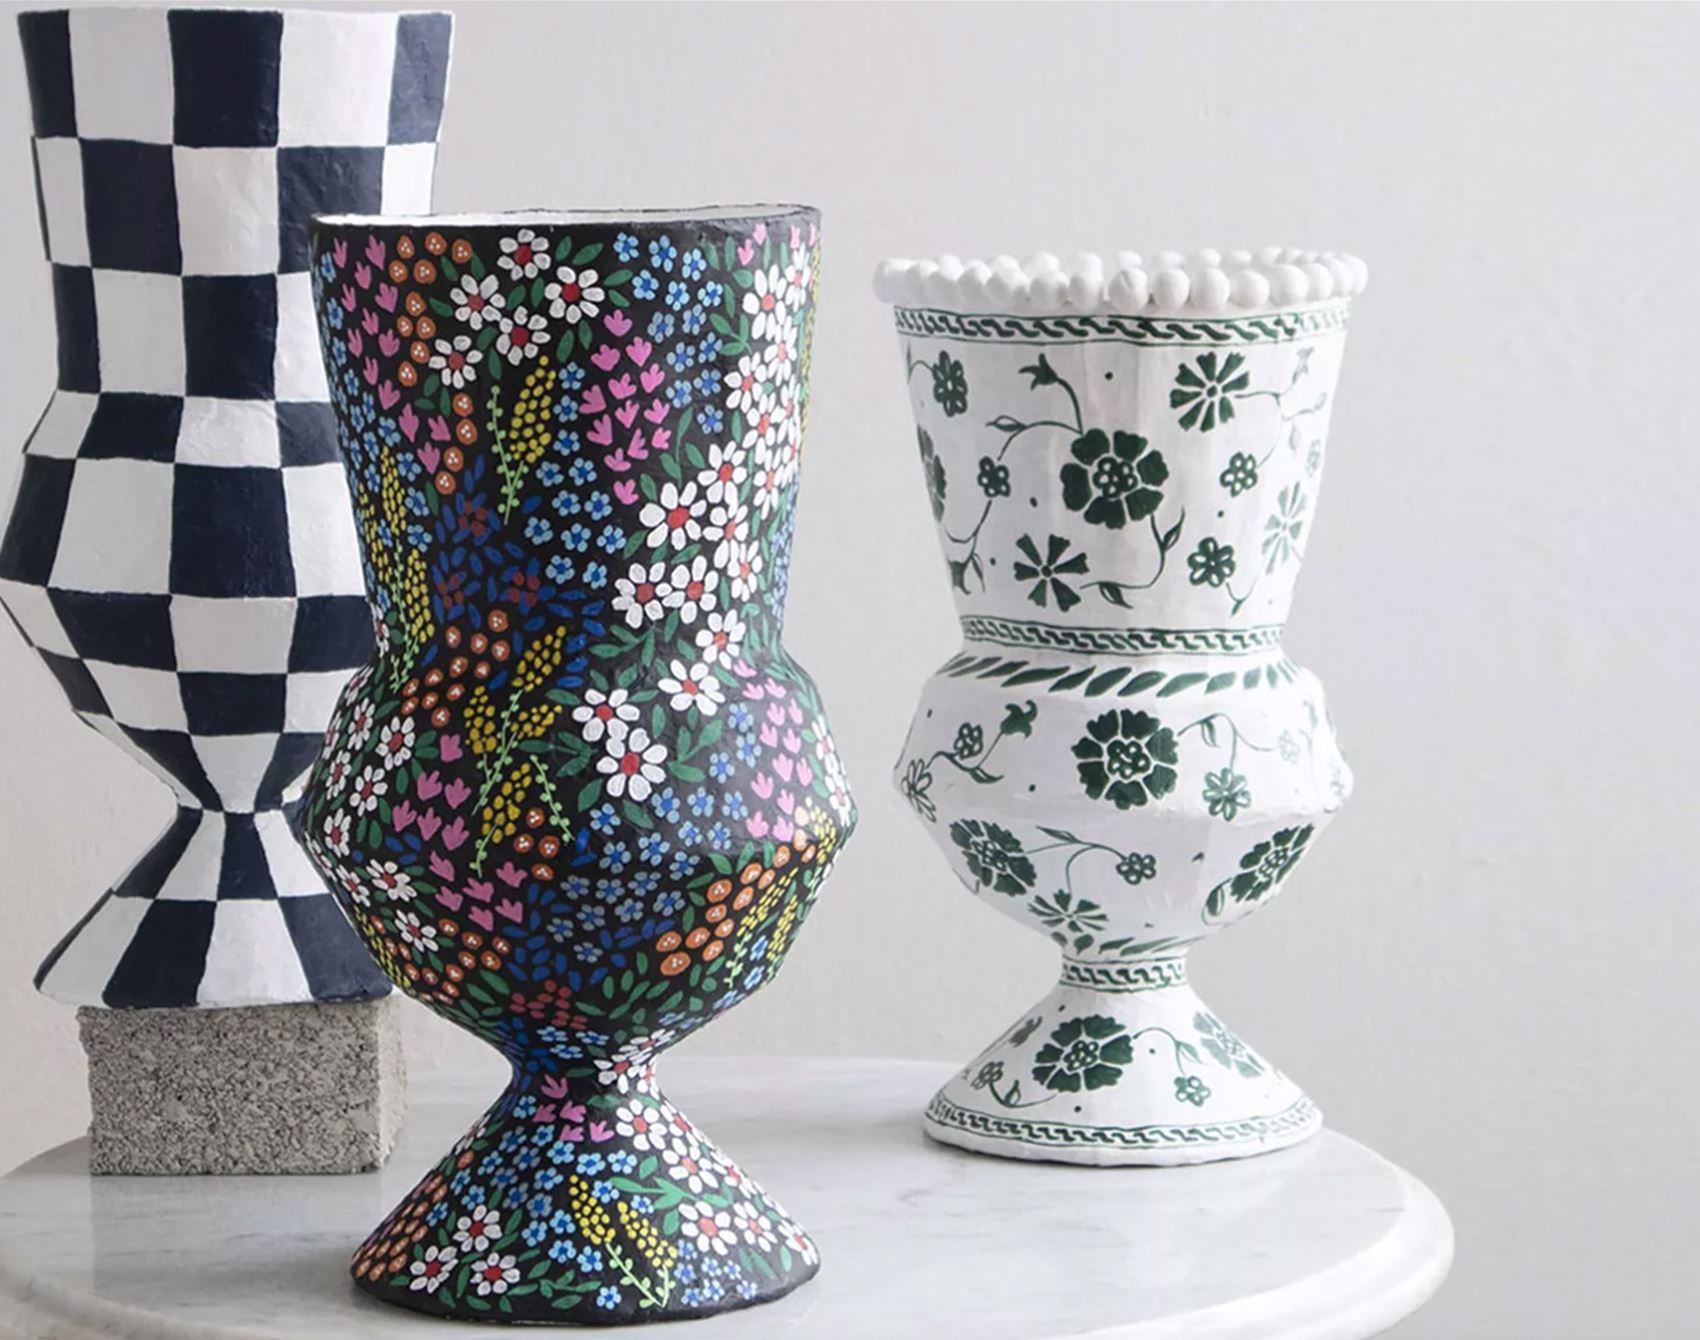 frankie exclusive diy: papier-mâché vases • craft • frankie